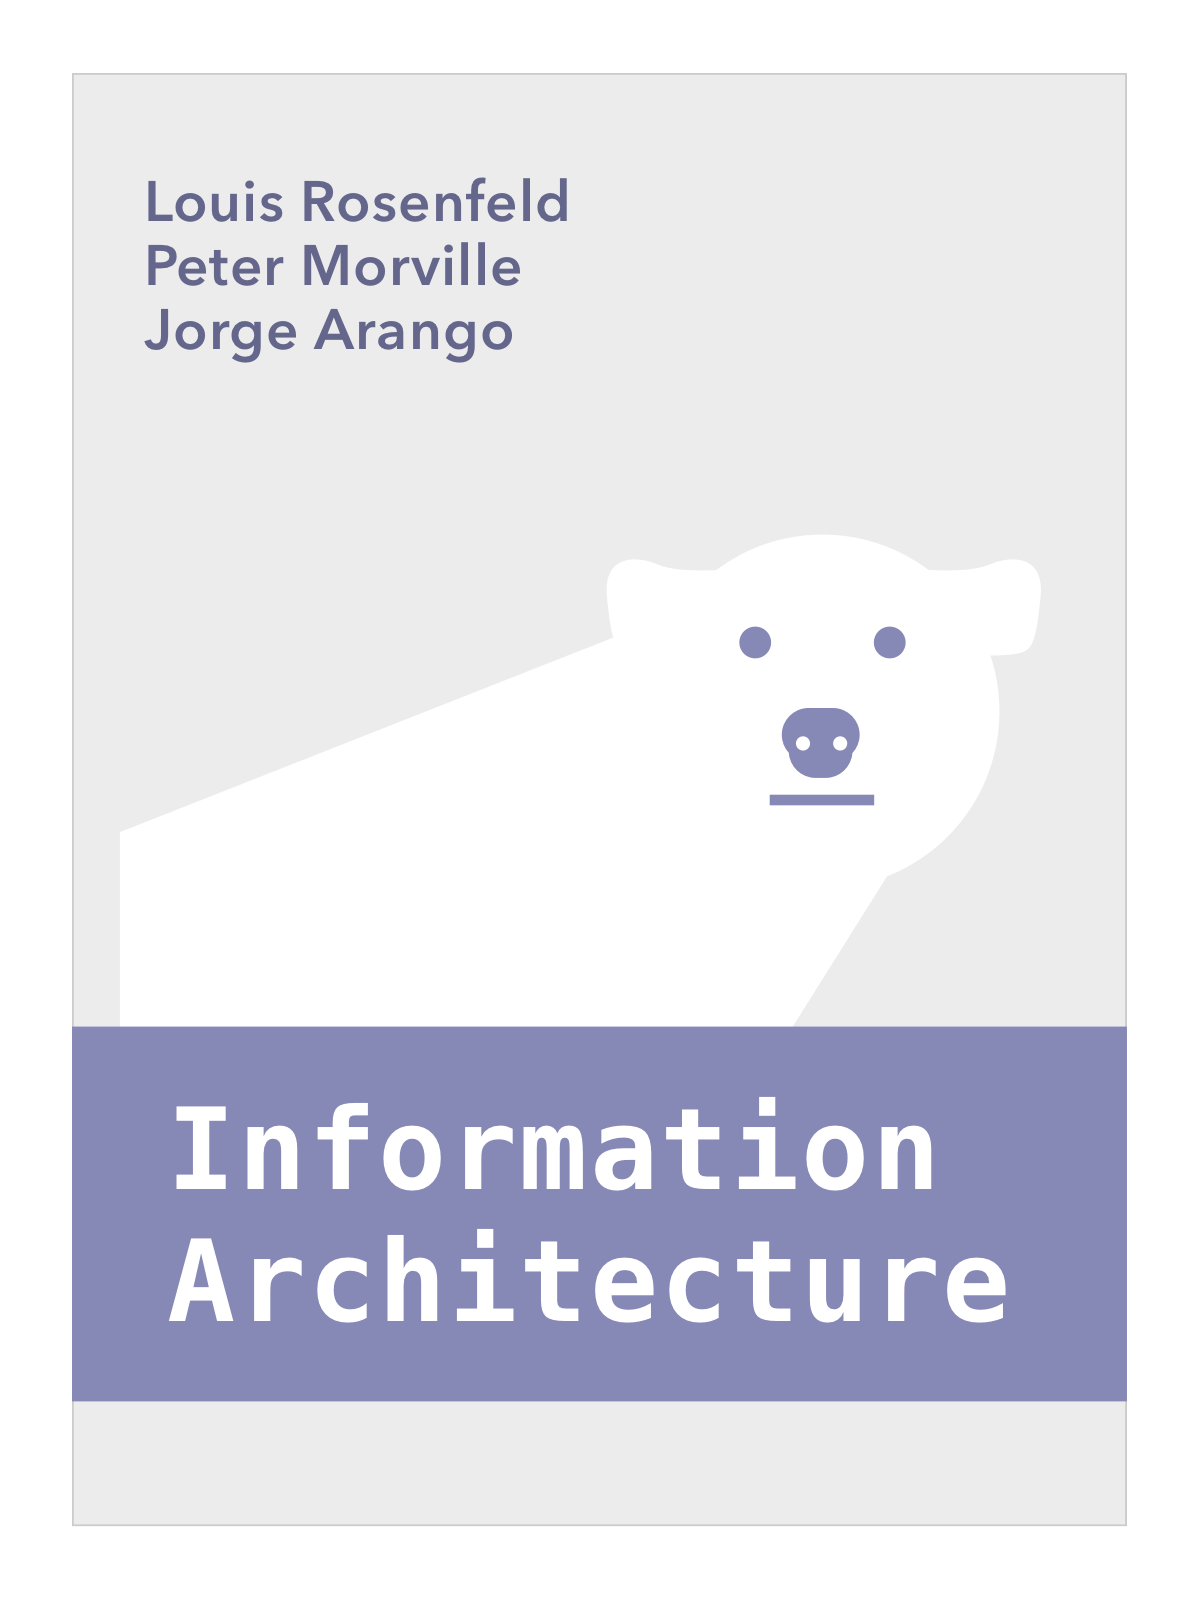 Louis Rosenfeld; Information Architecture